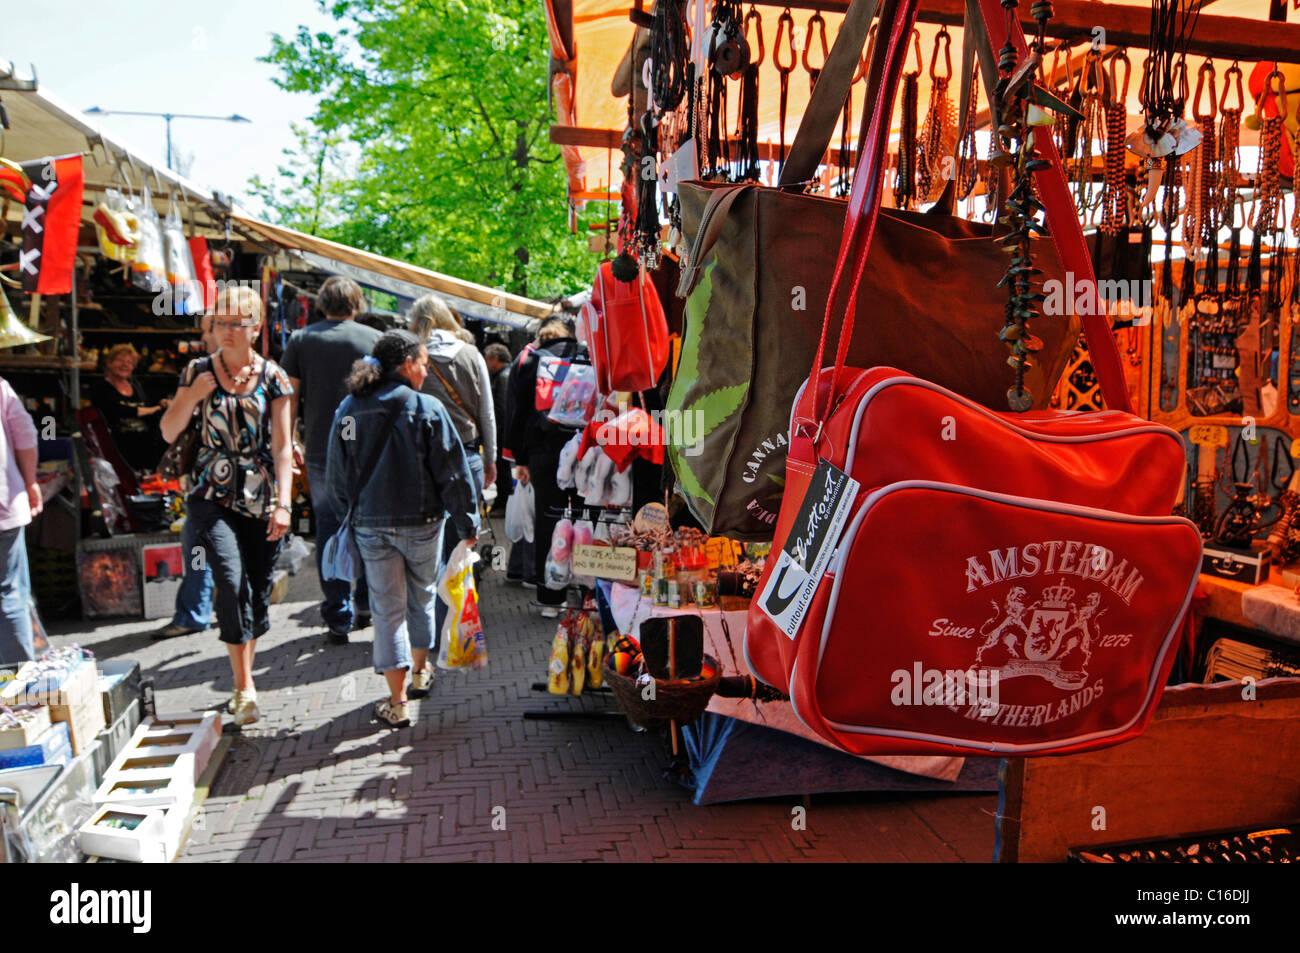 Weekly market, flea market, clothes market, souvenir, handbag, Amsterdam, Holland, Netherlands, Europe Stock Photo